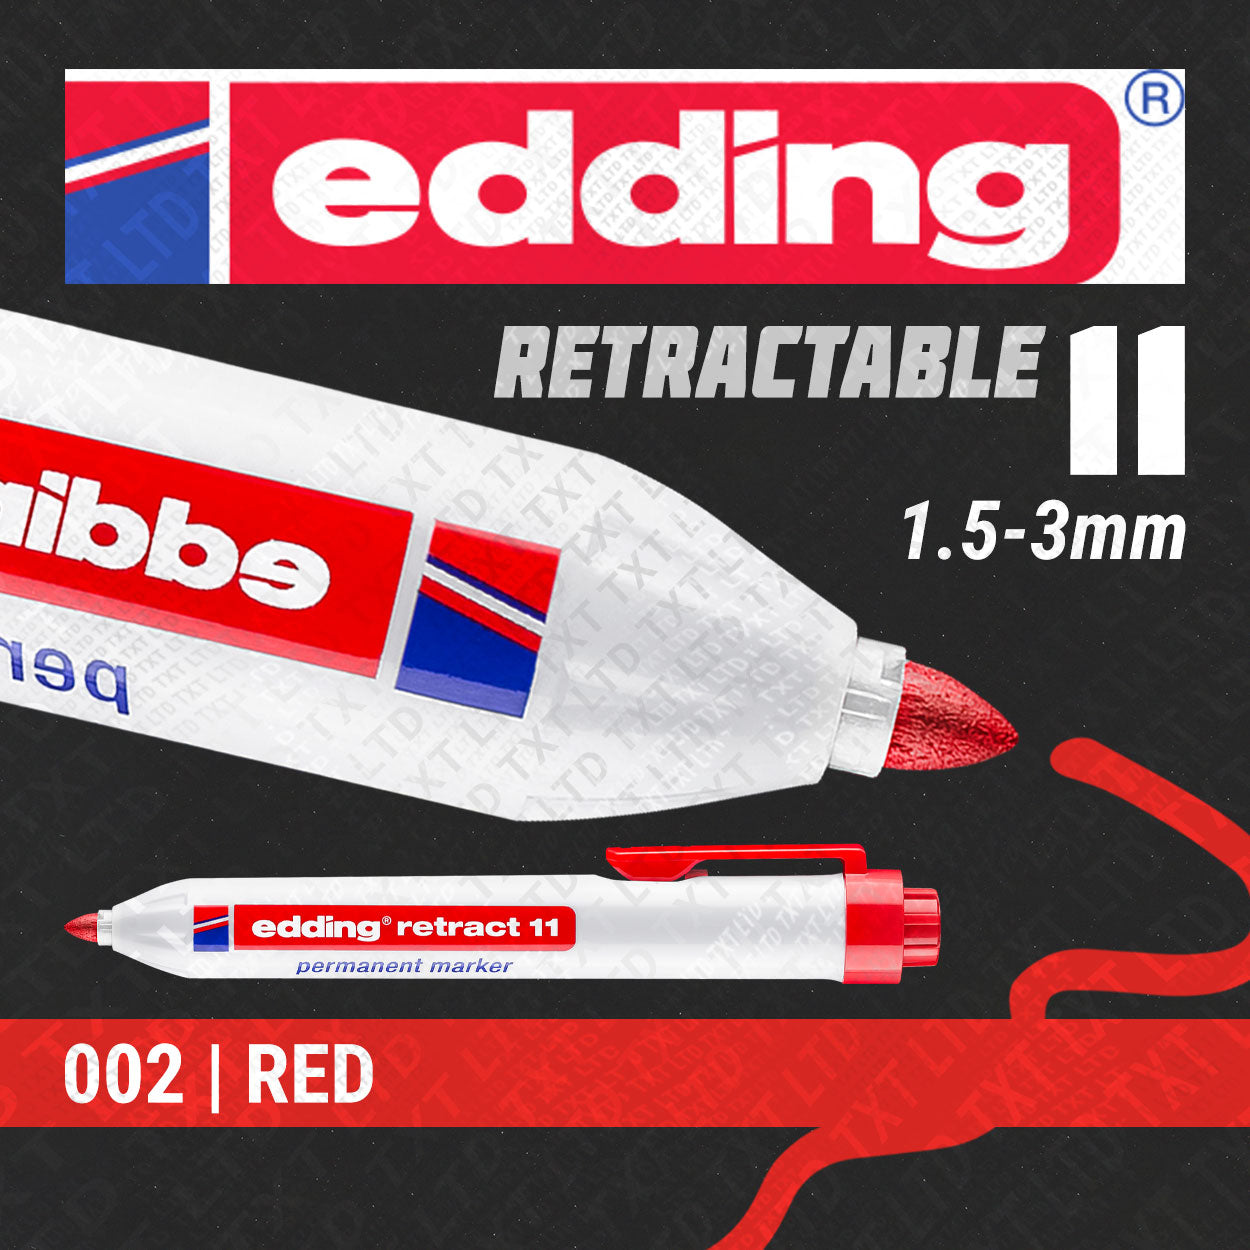 edding 11 Retract Permanent Marker 1.5-3mm